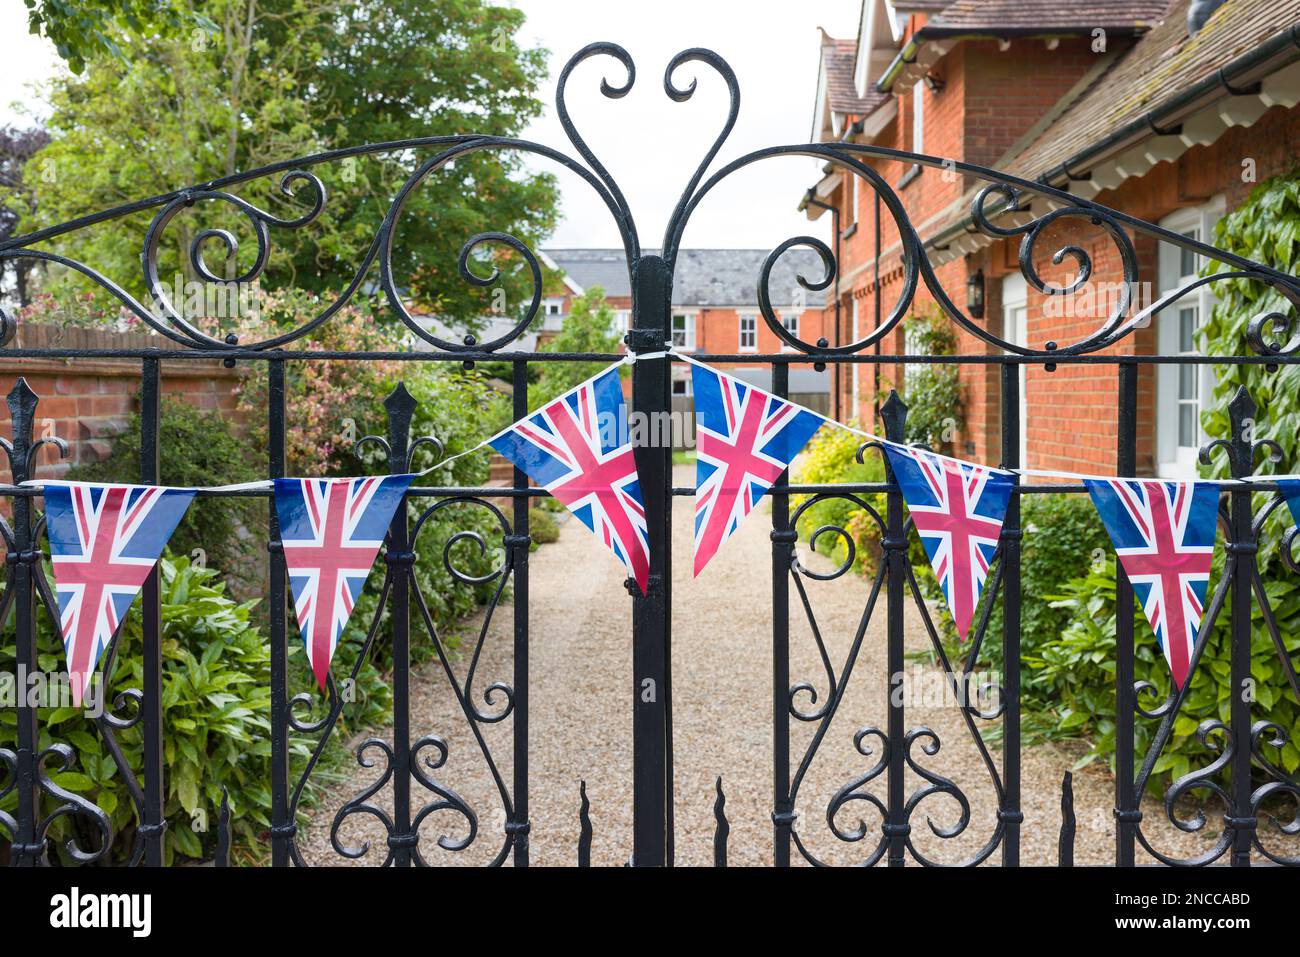 Union Jack (Union flag) bunting outside iron gates of a traditional country house in Buckinghamshire, England, UK Stock Photo